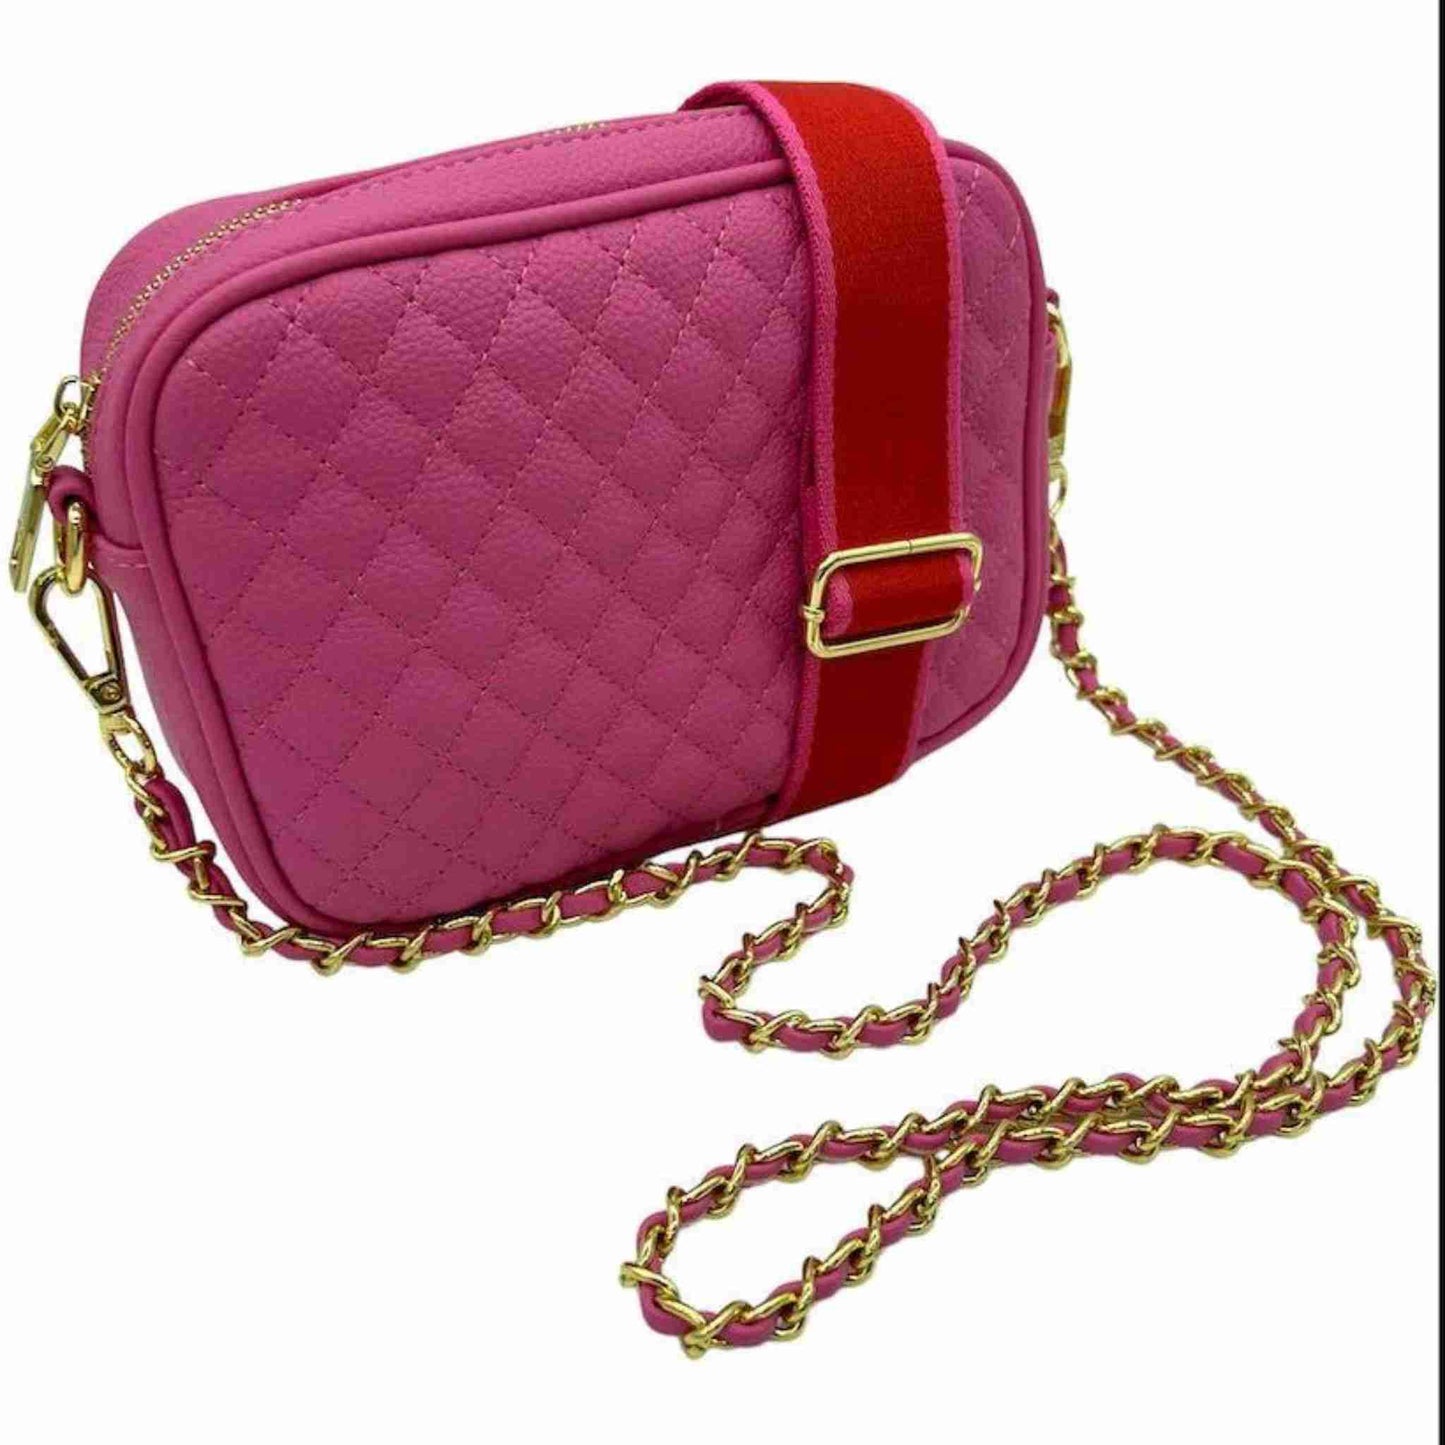 Ruby Stitch Cross Body Bag - Bright Pink